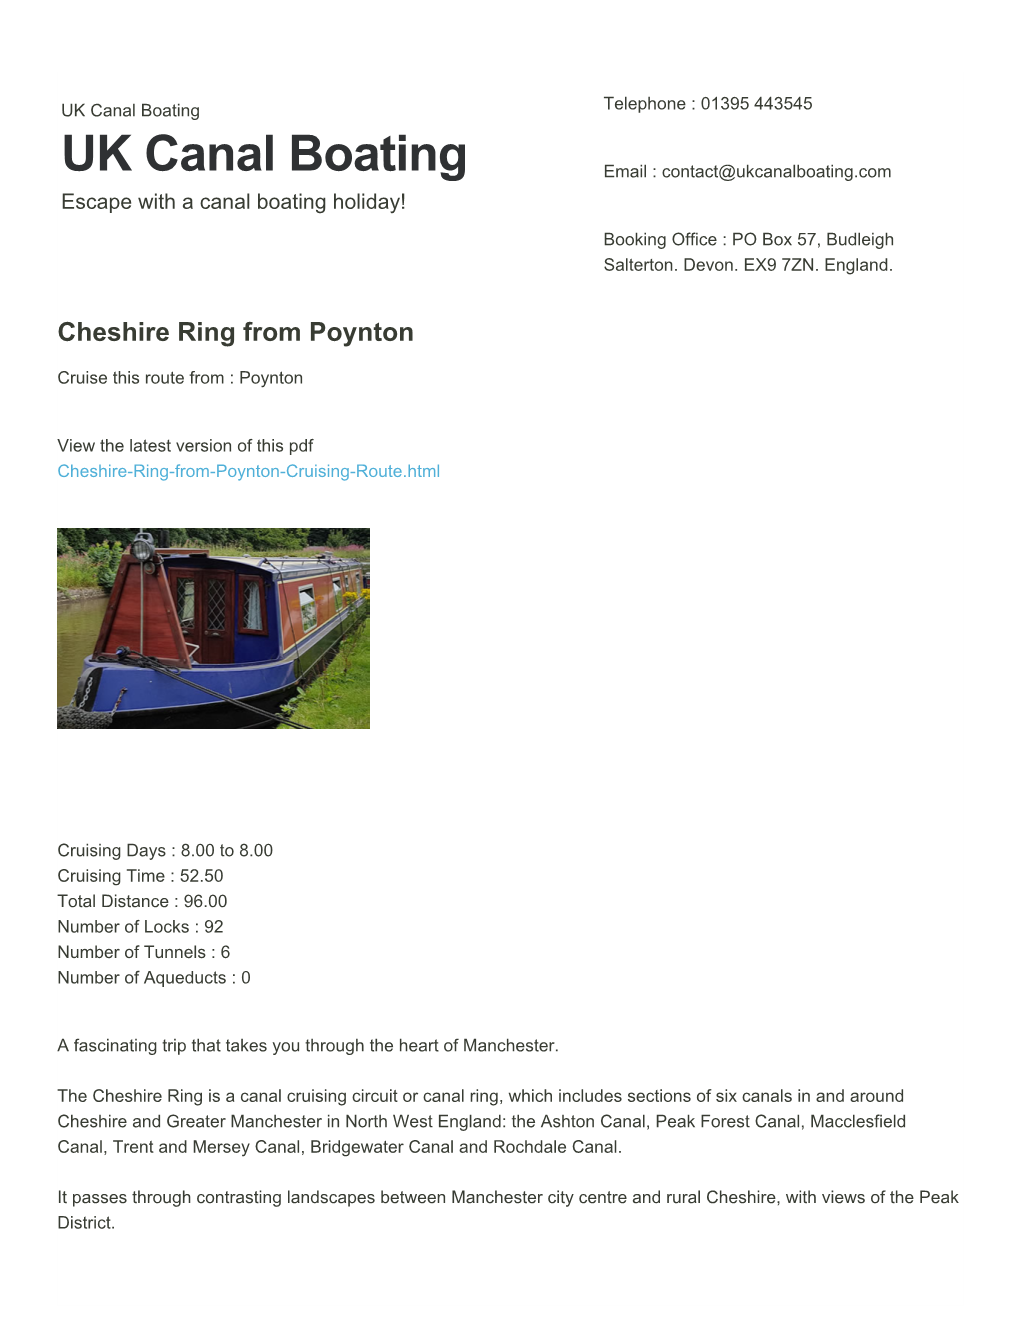 Cheshire-Ring-From-Poynton.Pdf